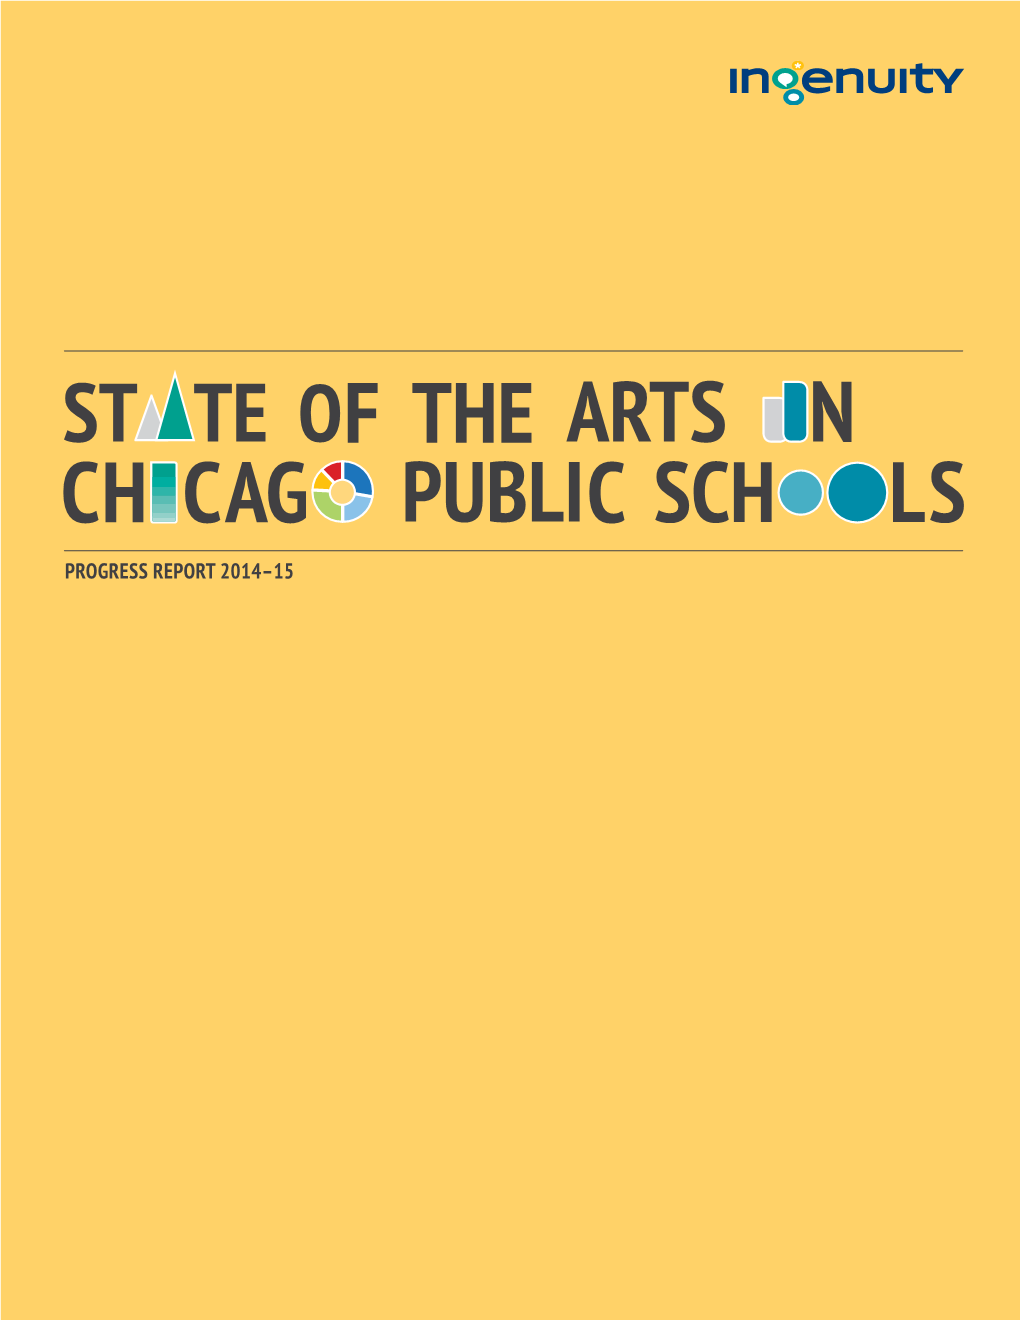 State of the Arts in Chicago Public Schools: Progress Report 2014-15